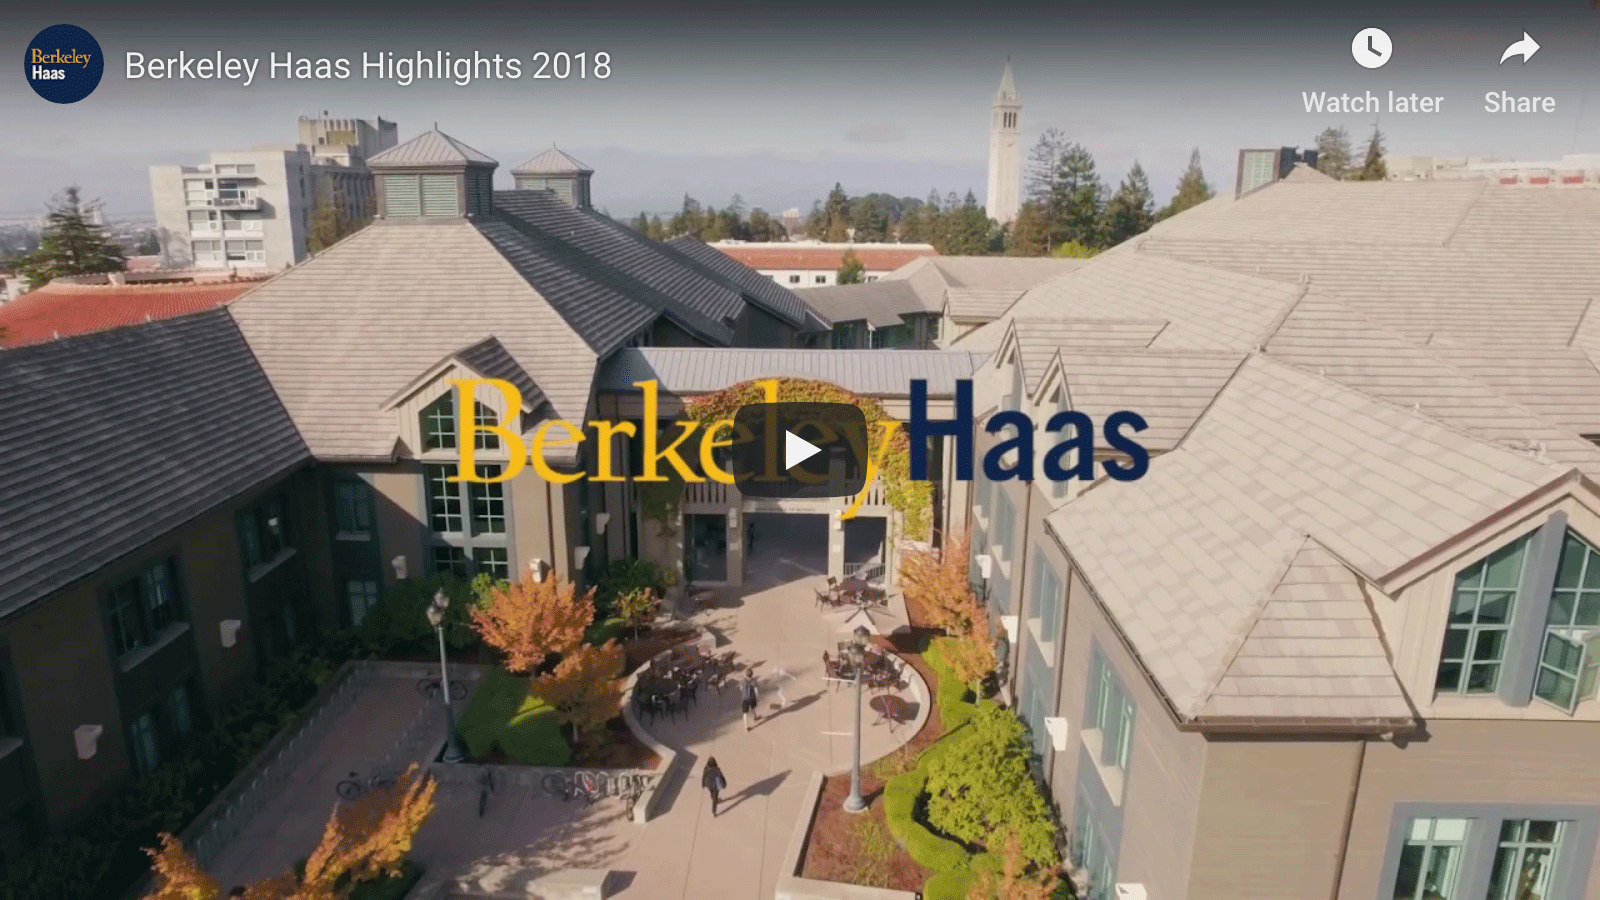 Video of Haas Program at UC Berkeley